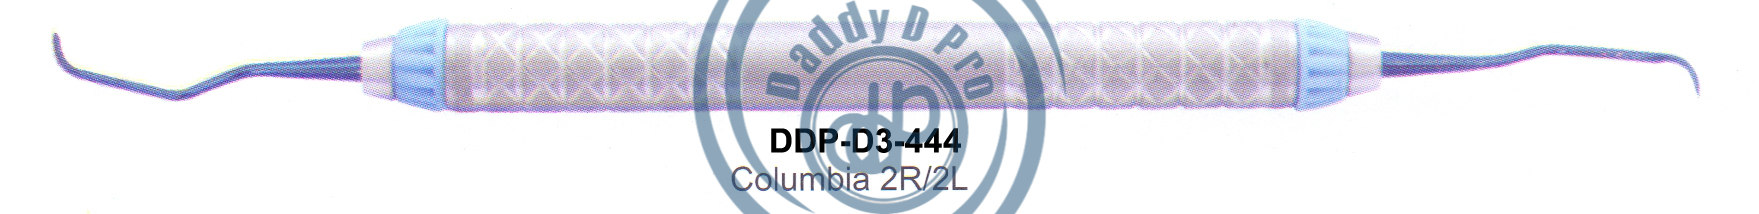 images/DDP-D3-444.png